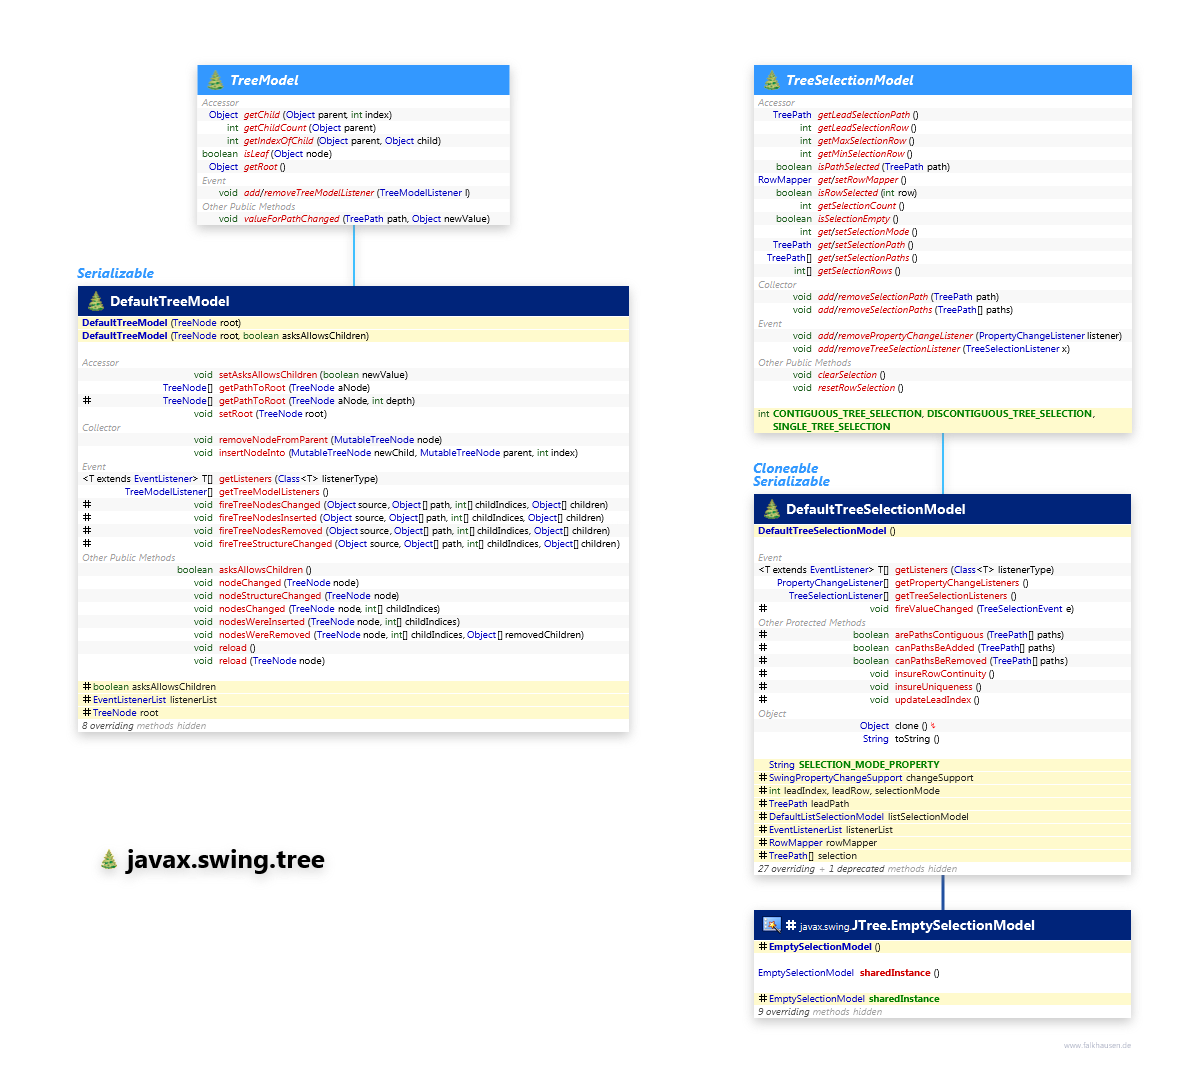 javax.swing.tree TreeModel class diagram and api documentation for Java 8